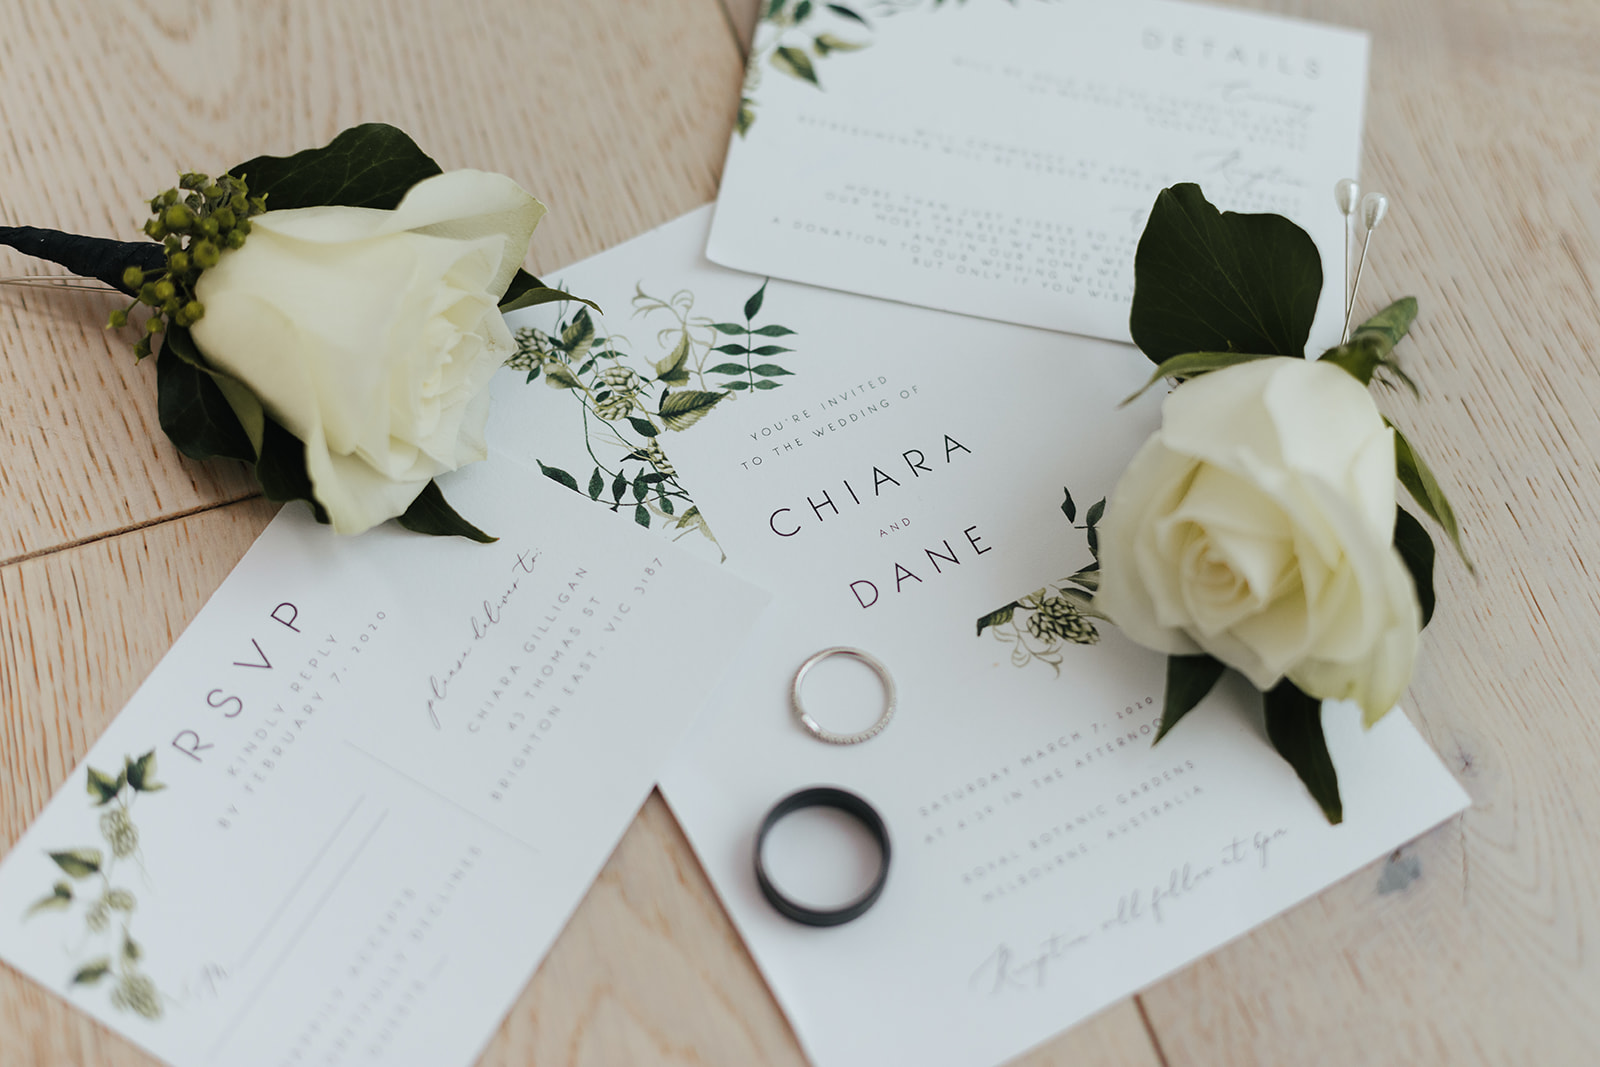 Wedding invitations for Chiara and Dane's Terrace at the Royal Botanic Gardens Melbourne wedding